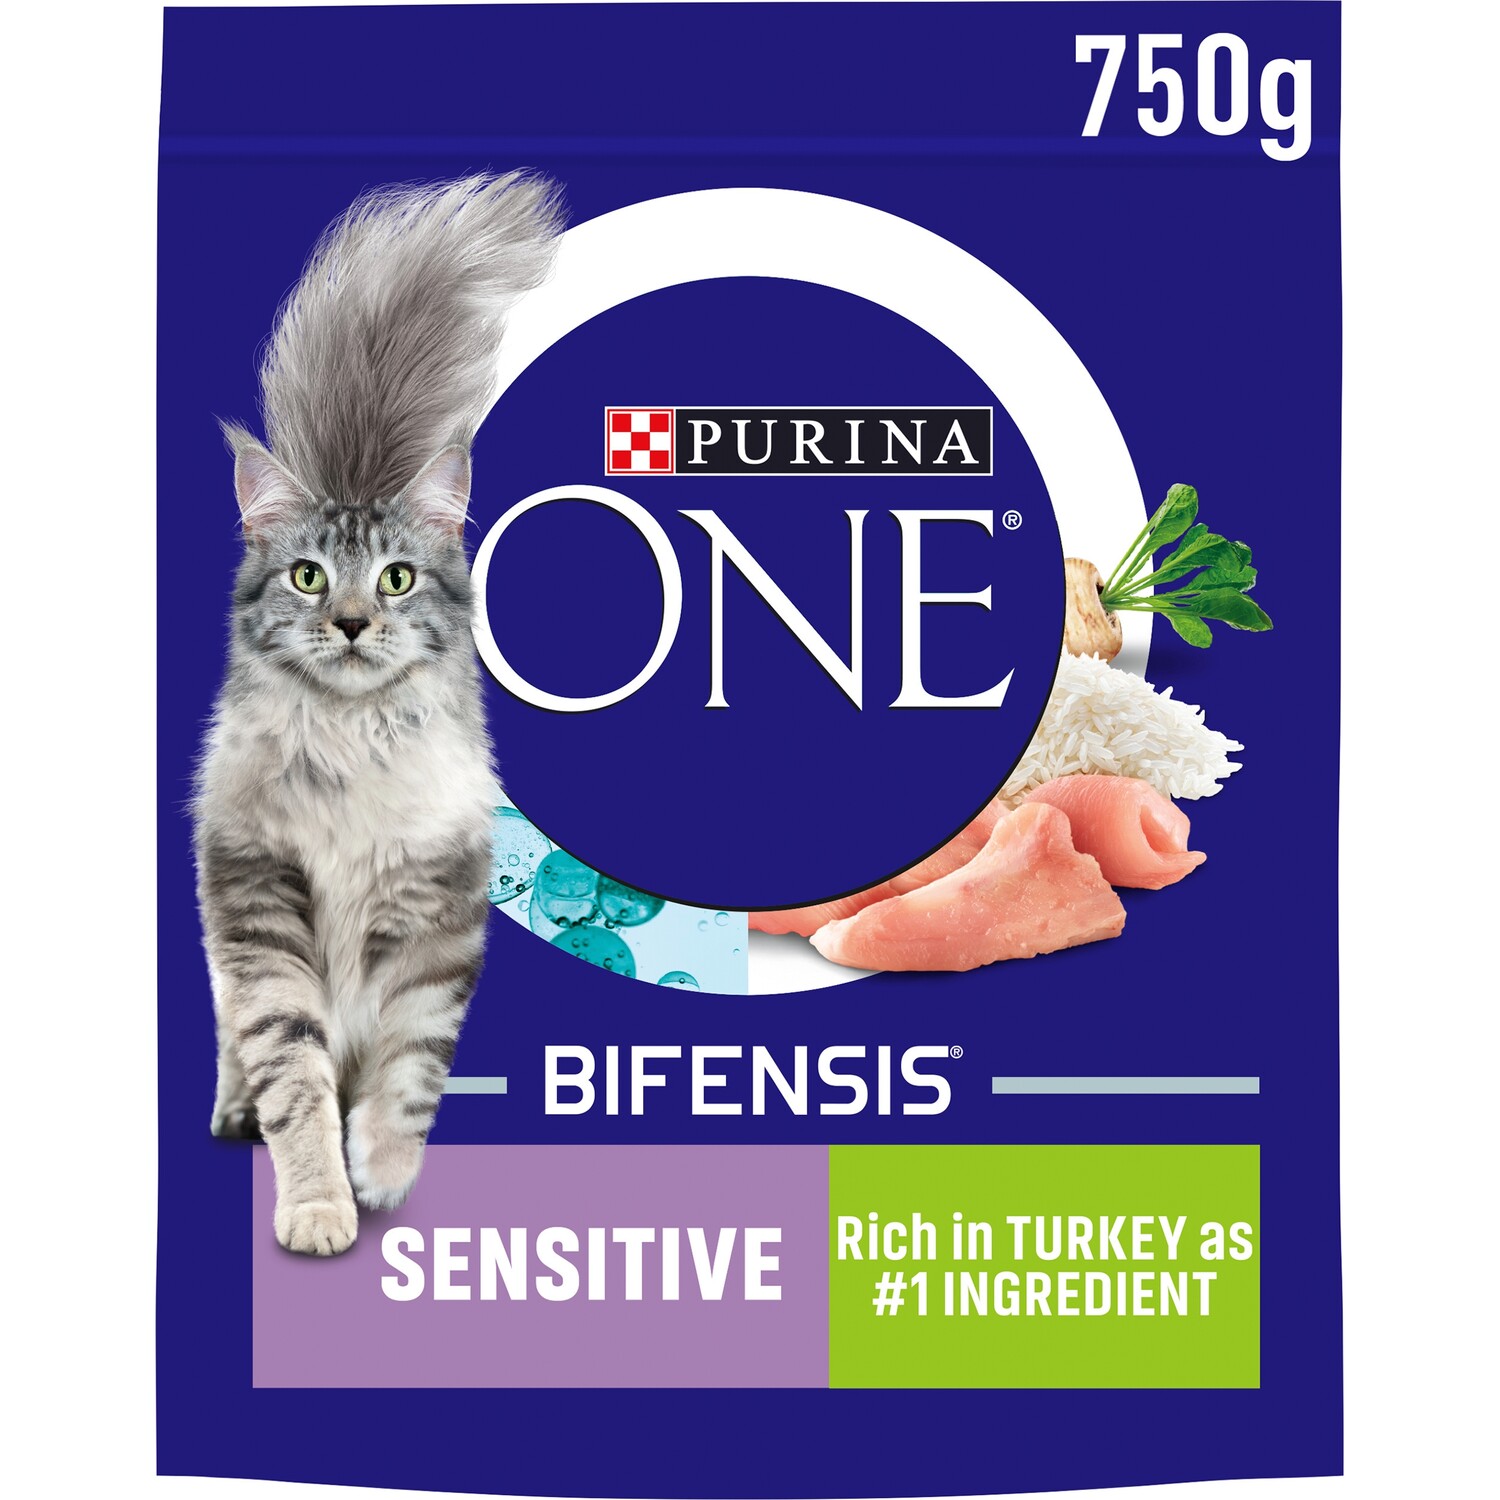 Purina One Sensitive Turkey Dry Cat Food 750g Image 1